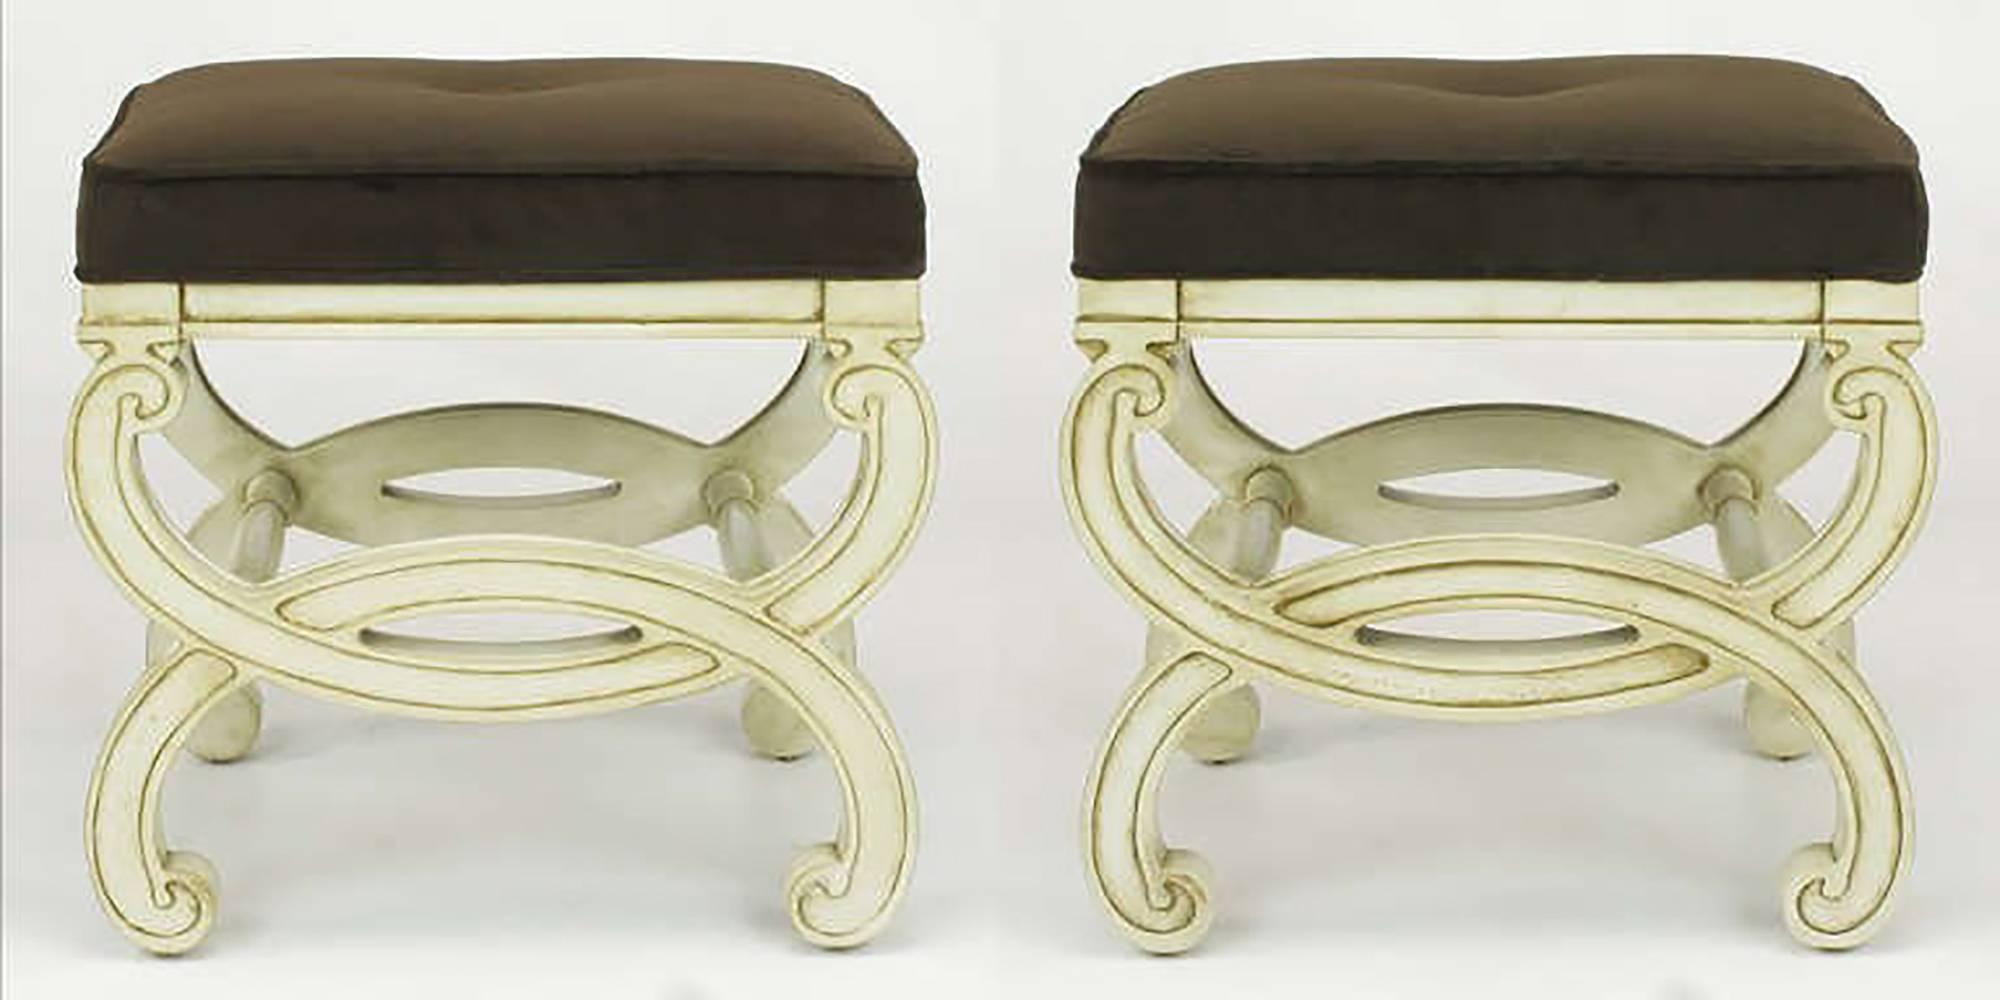 American Pair of Regency Style Interlocking Curule Benches in Glazed Ivory & Sable Velvet